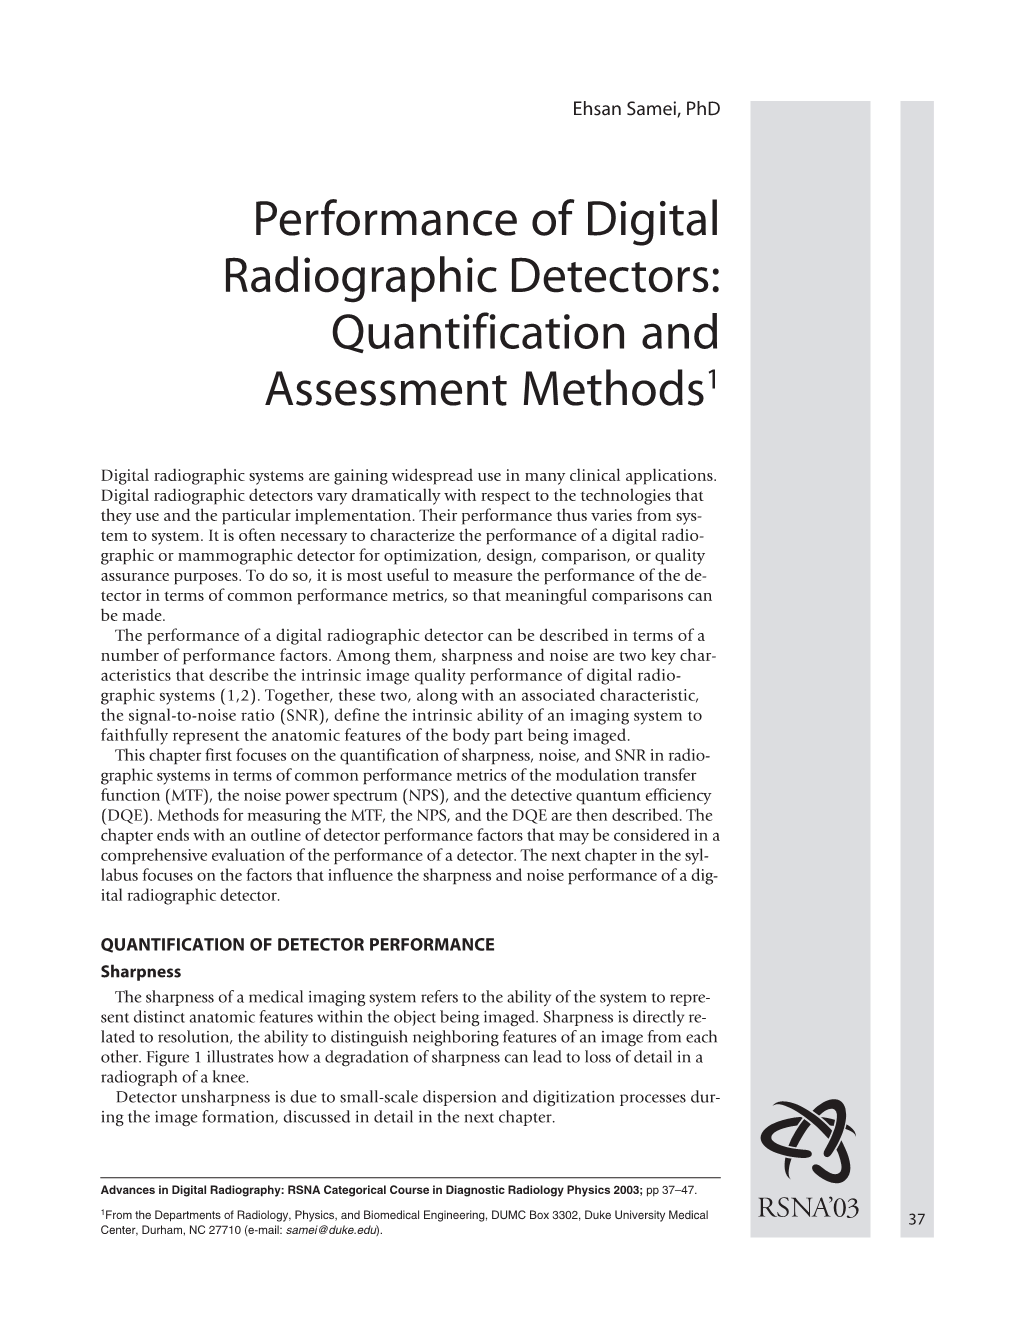 Performance of Digital Radiographic Detectors: Quantification and Assessment Methods1